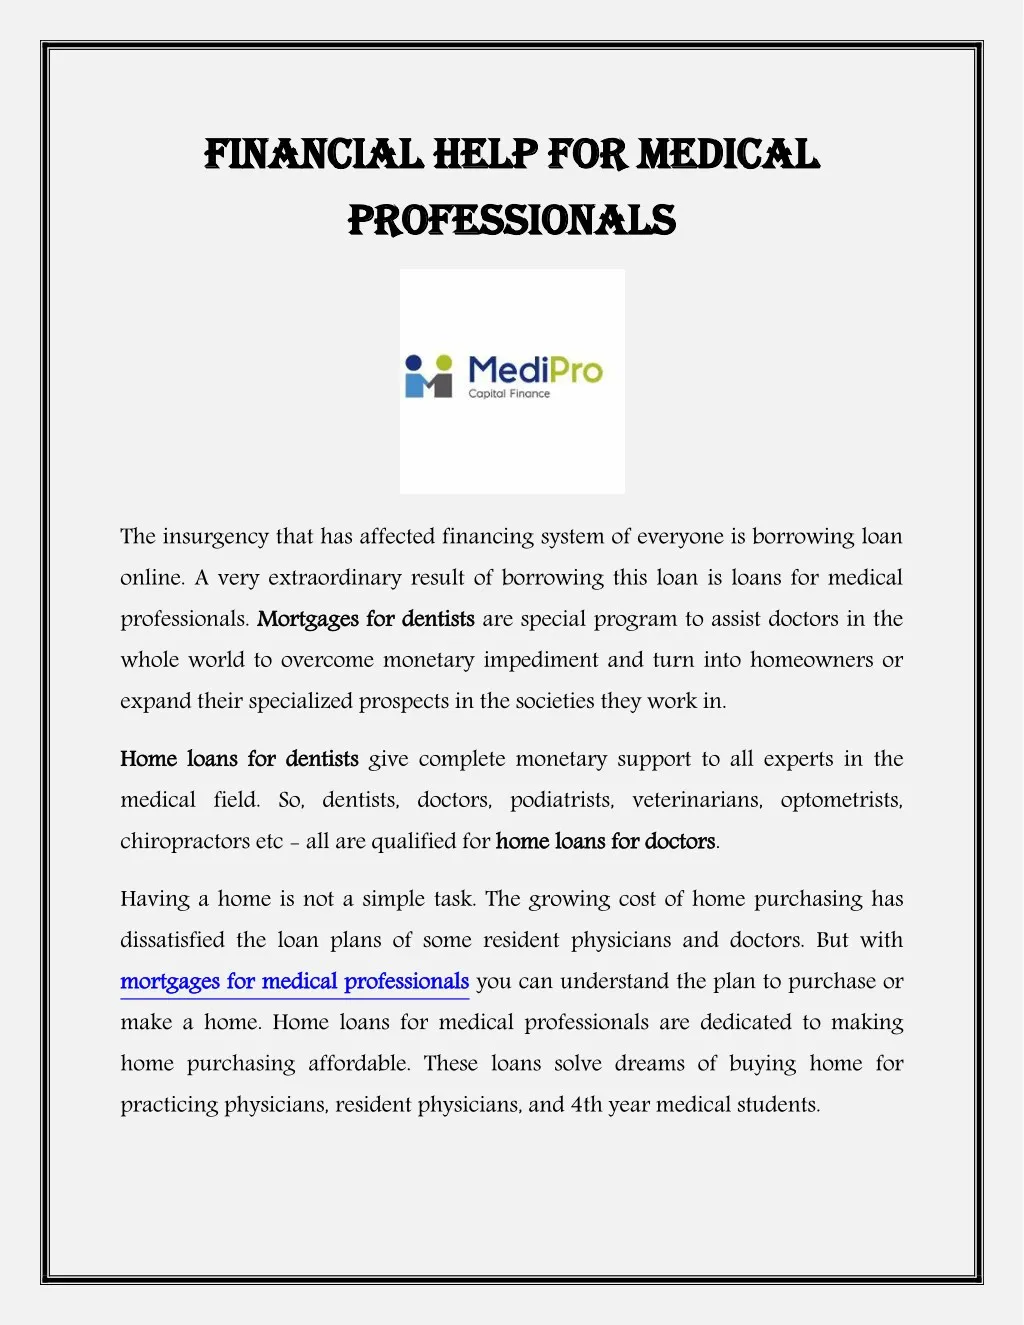 fina financial help ncial help for medica